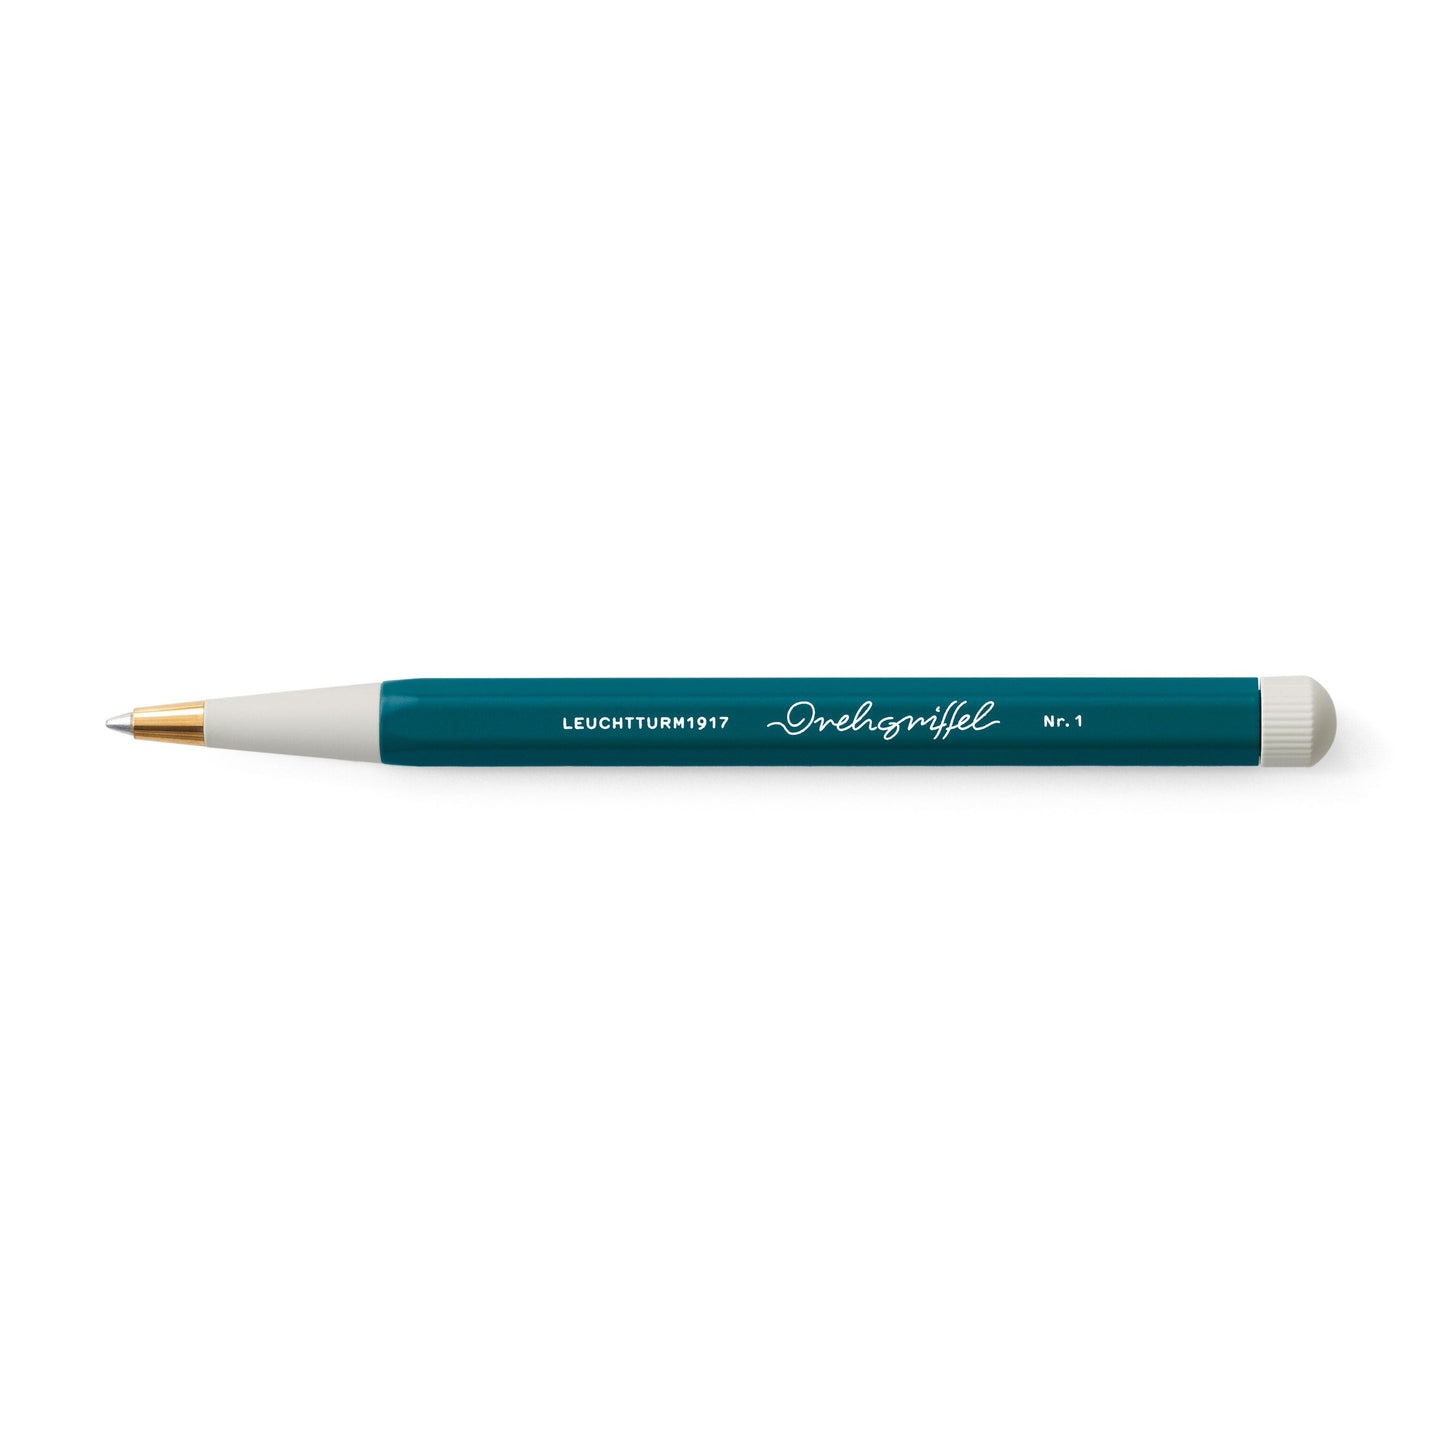 Drehgriffel Pen with Ballpoint Blue Ink